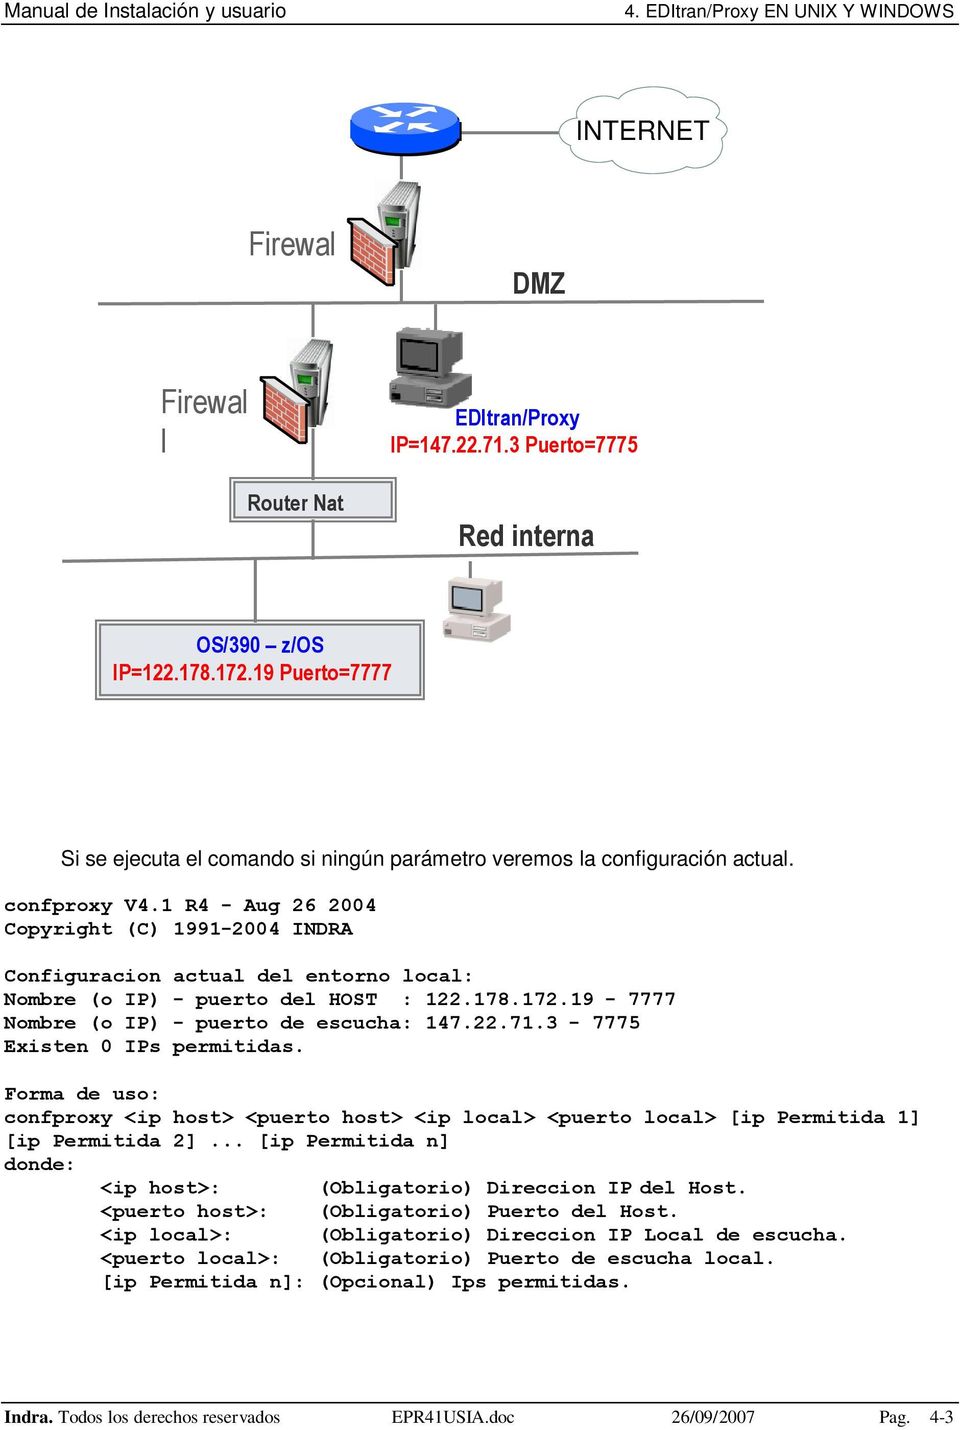 1 R4 - Aug 26 2004 Copyright (C) 1991-2004 INDRA Configuracion actual del entorno local: Nombre (o IP) - puerto del HOST : 122.178.172.19-7777 Nombre (o IP) - puerto de escucha: 147.22.71.